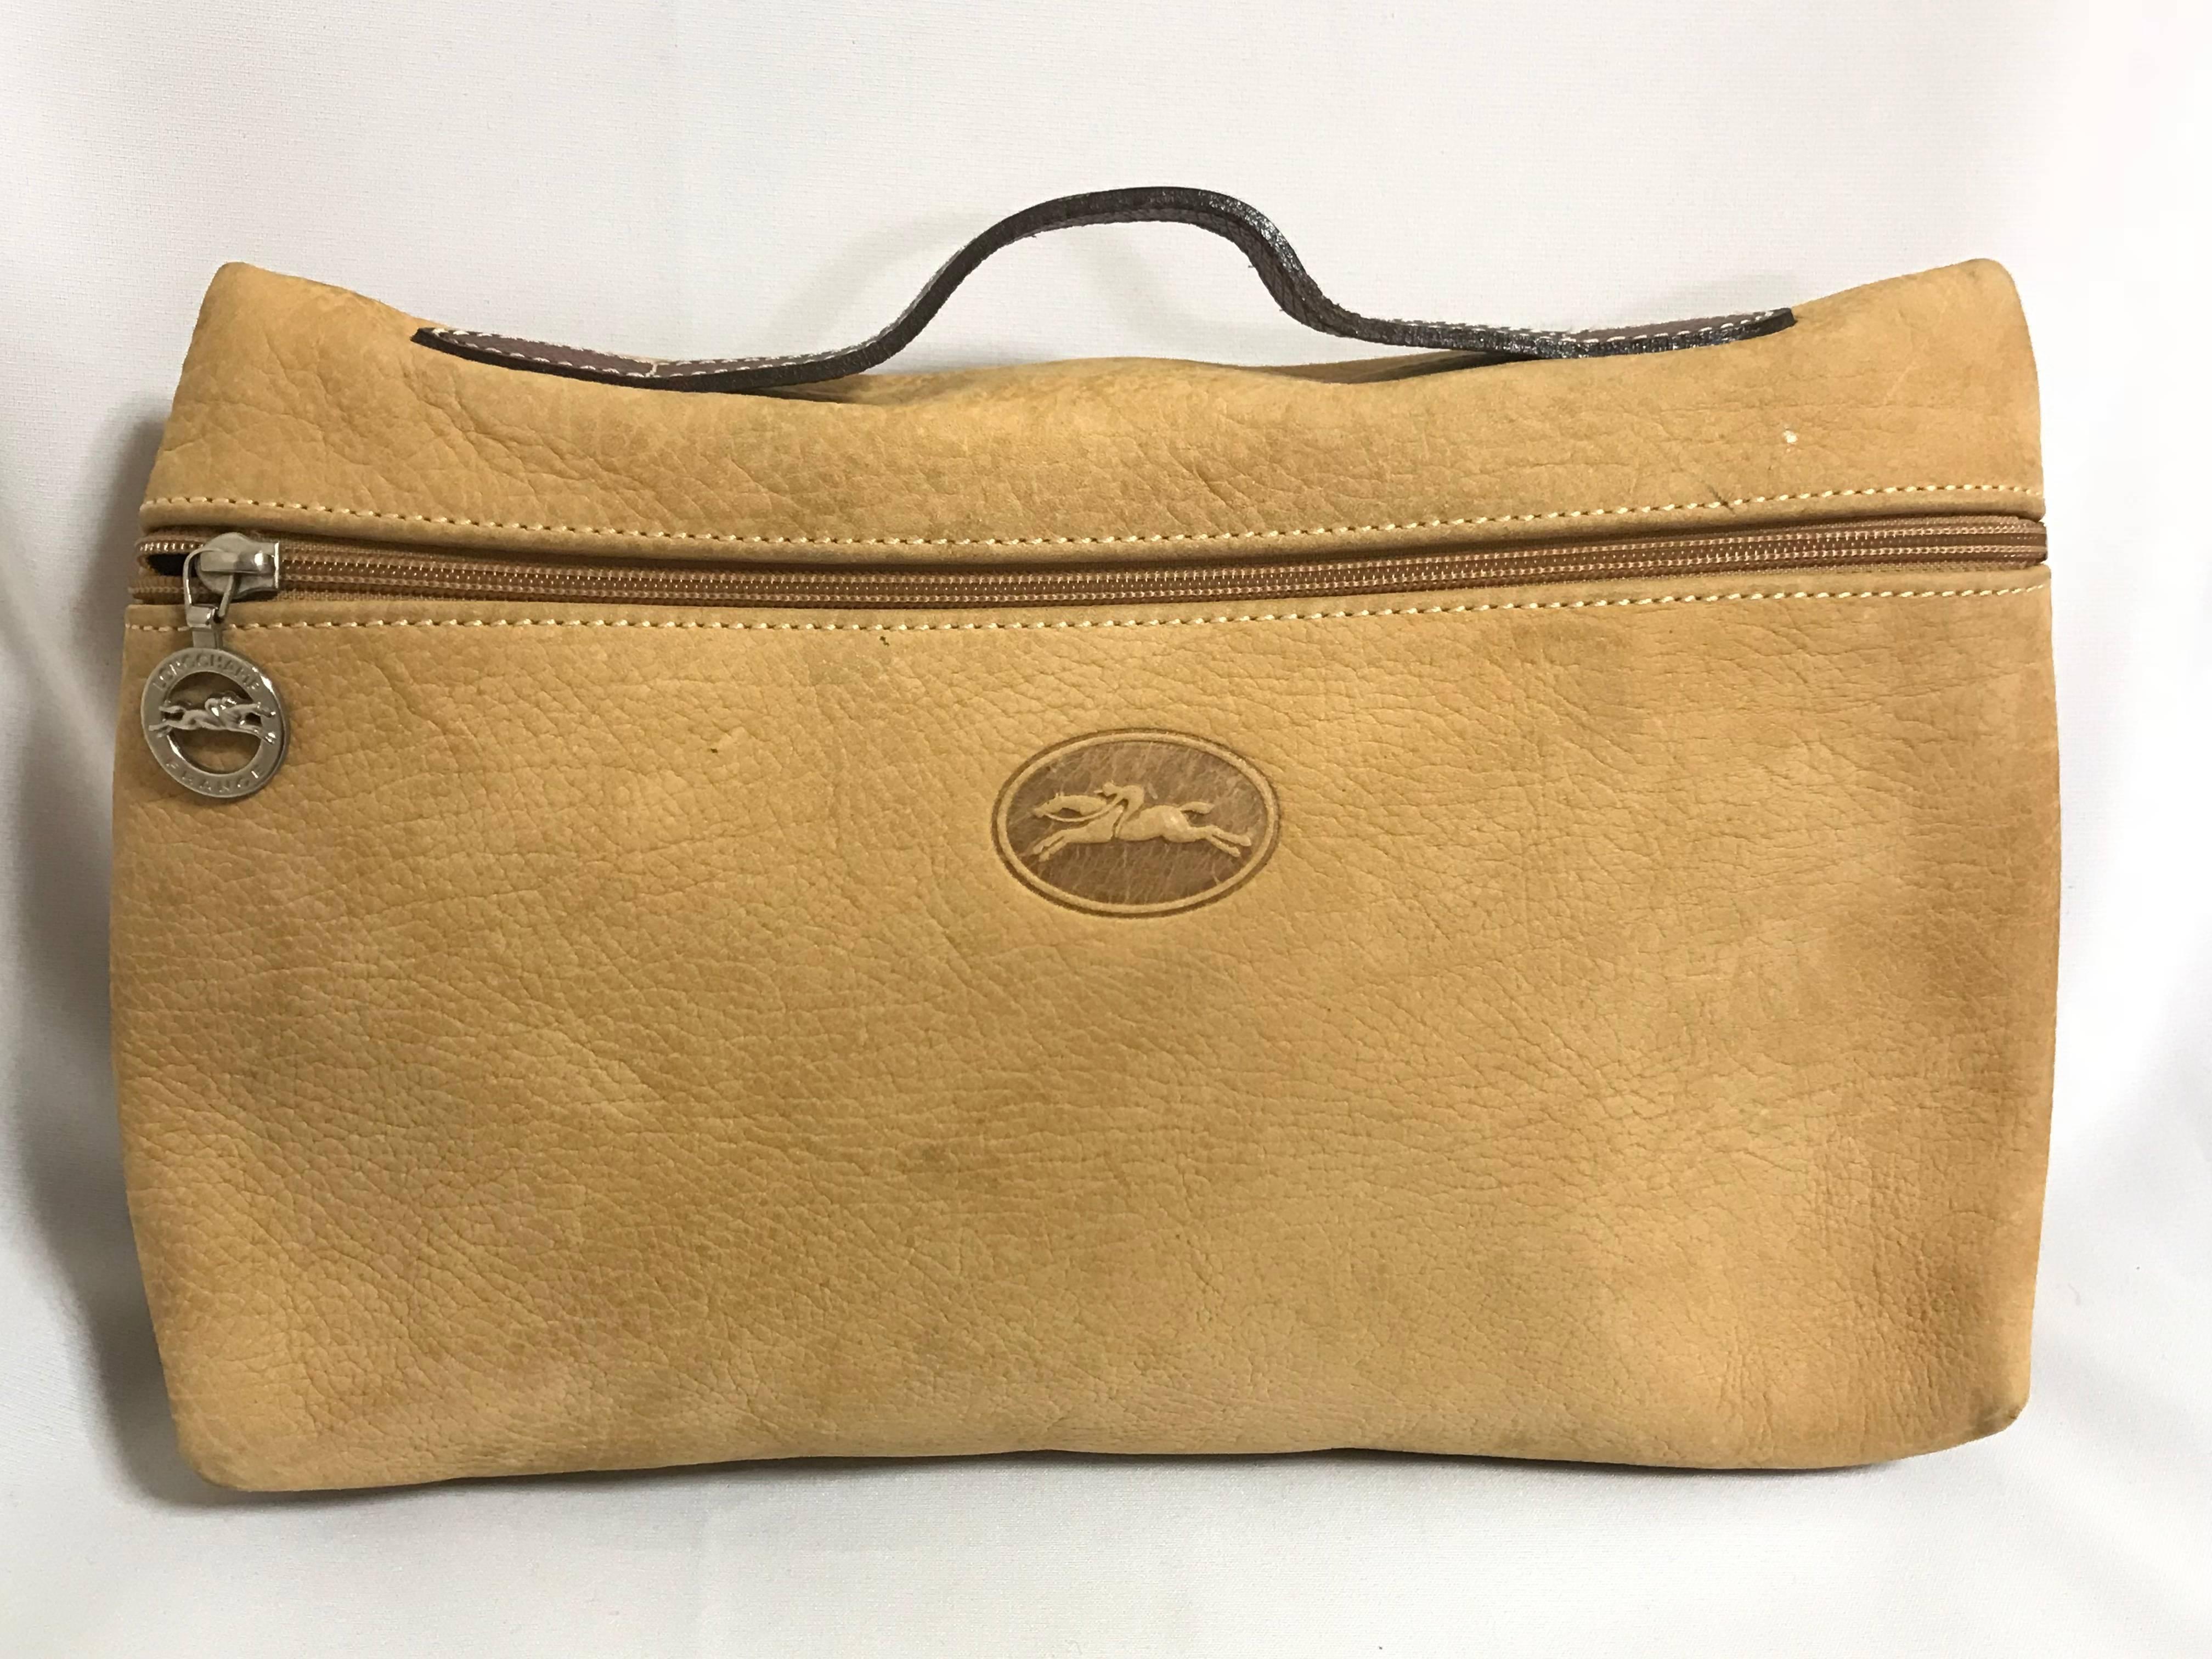 Vintage Longchamp beige suede leather travel pouch, Mini purse with logo motif. 1